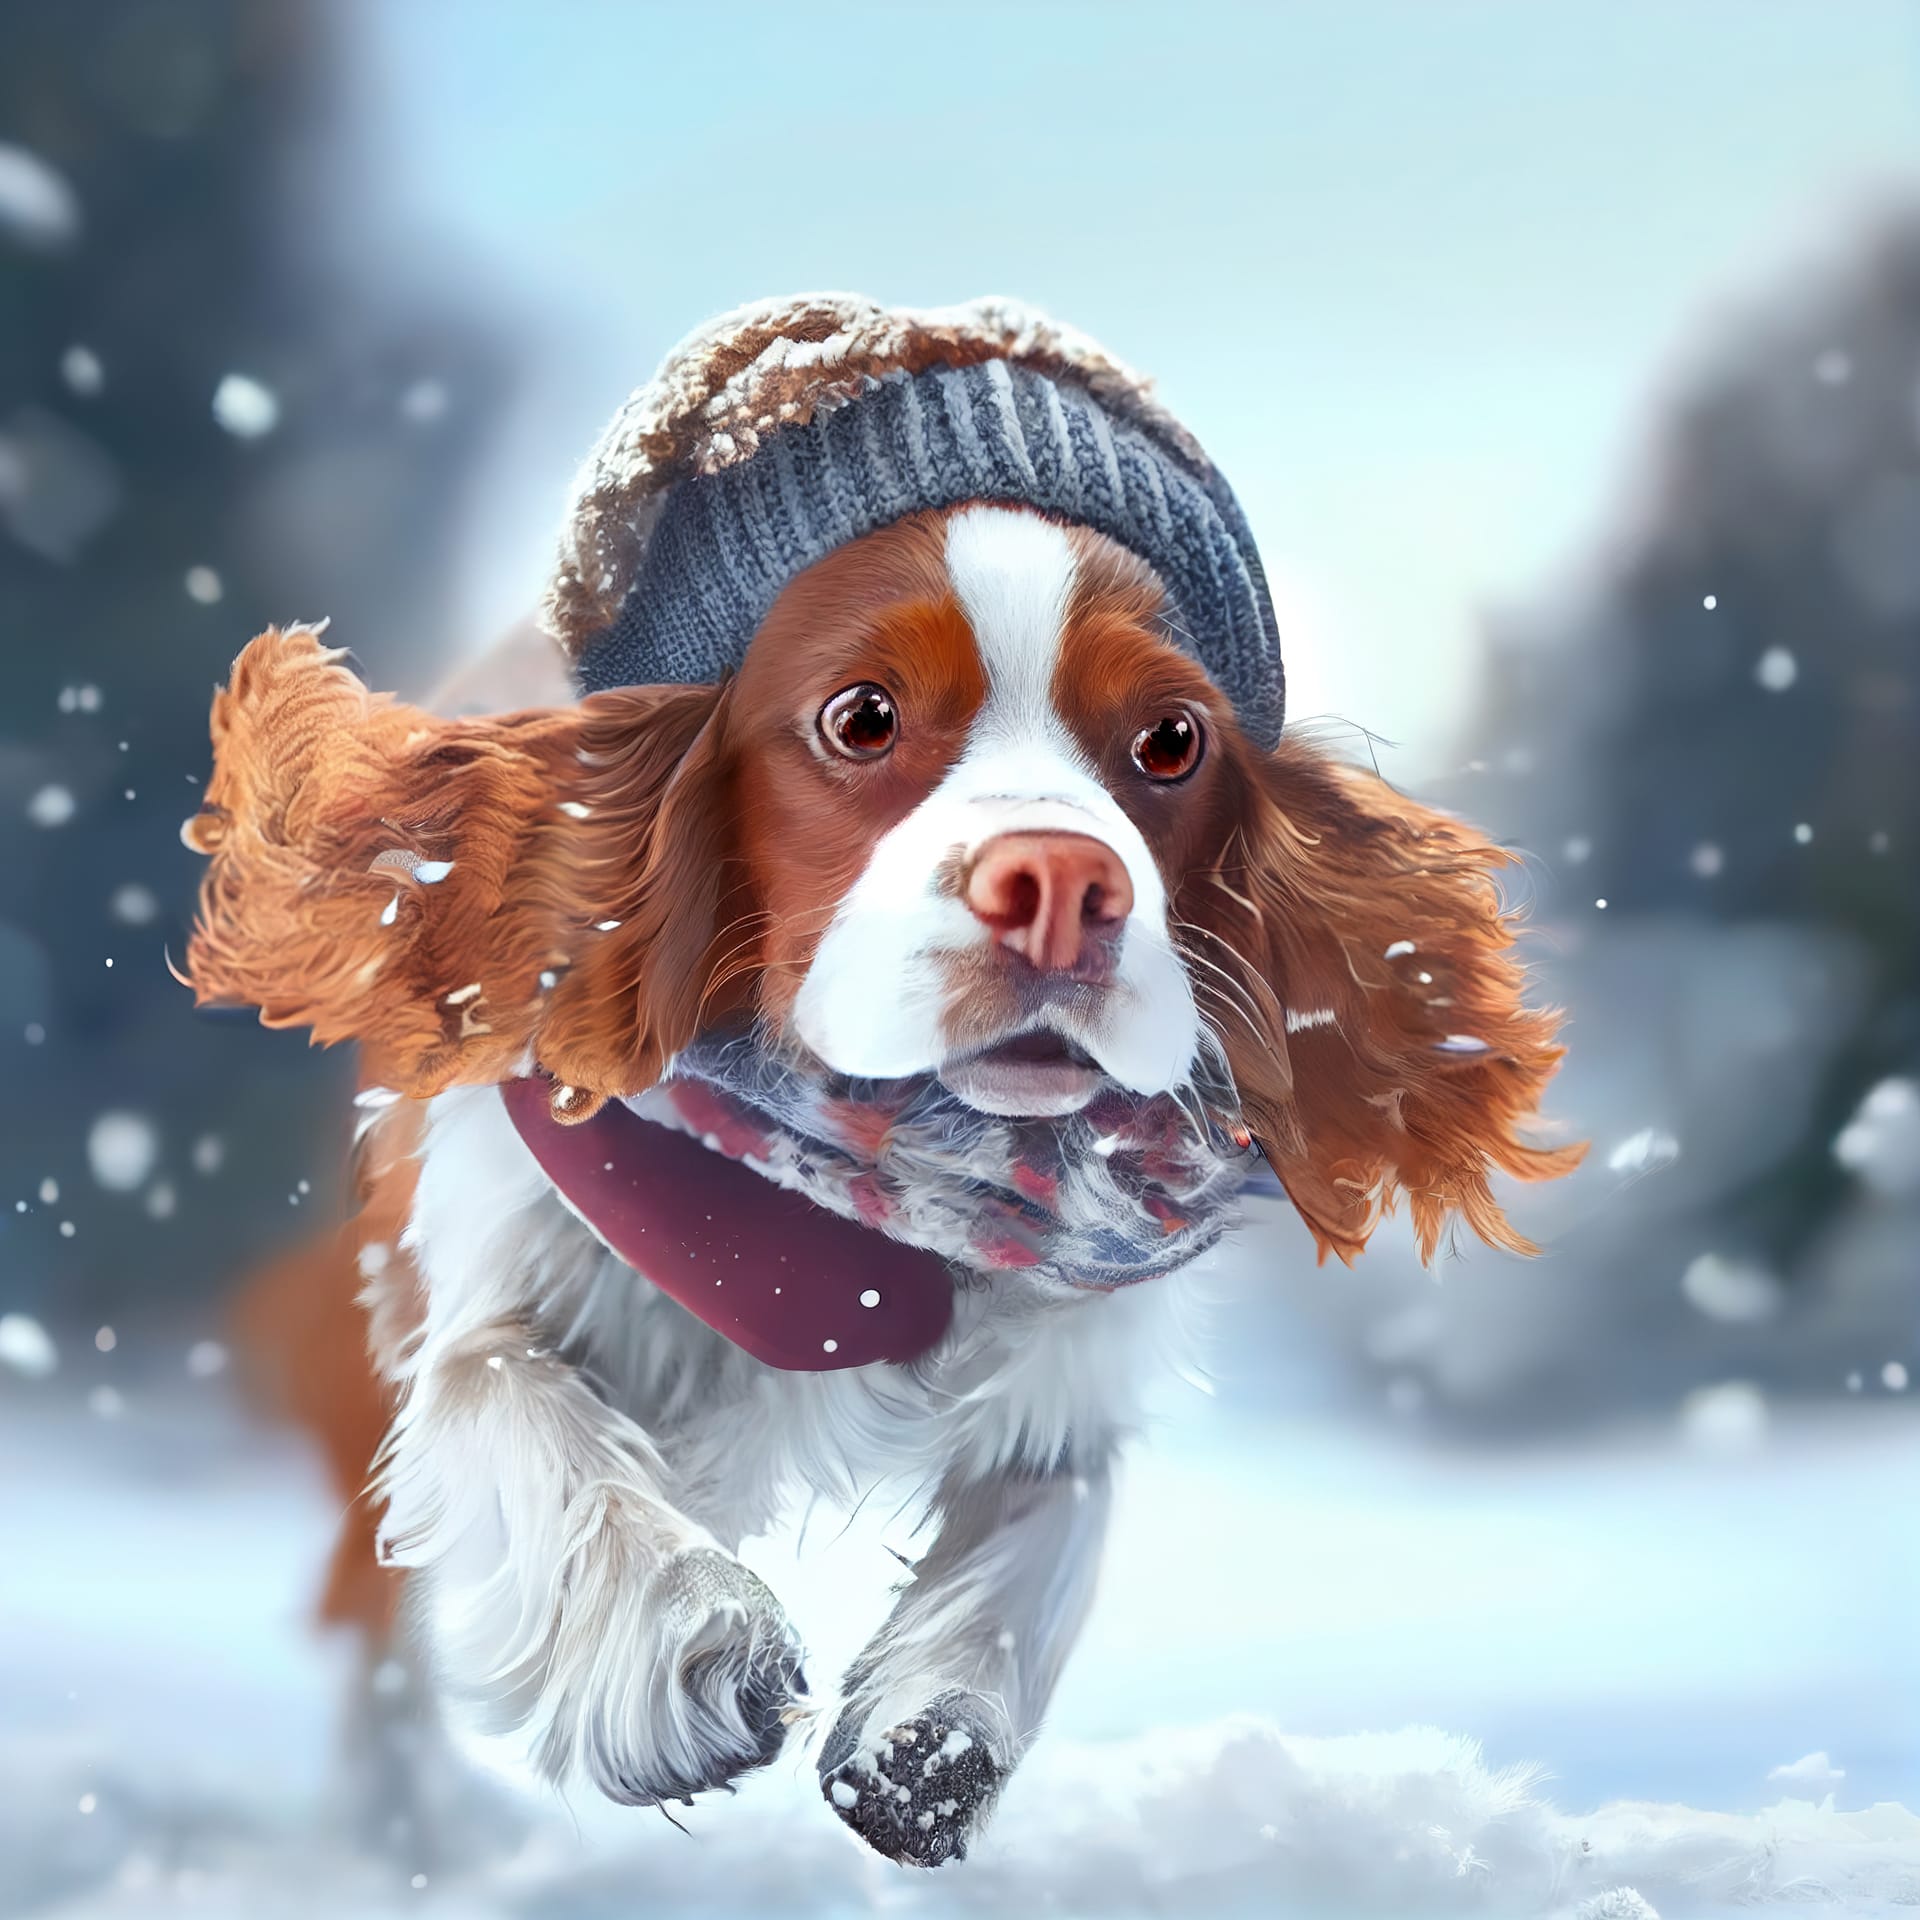 Spaniel dog knitted hat running winter park